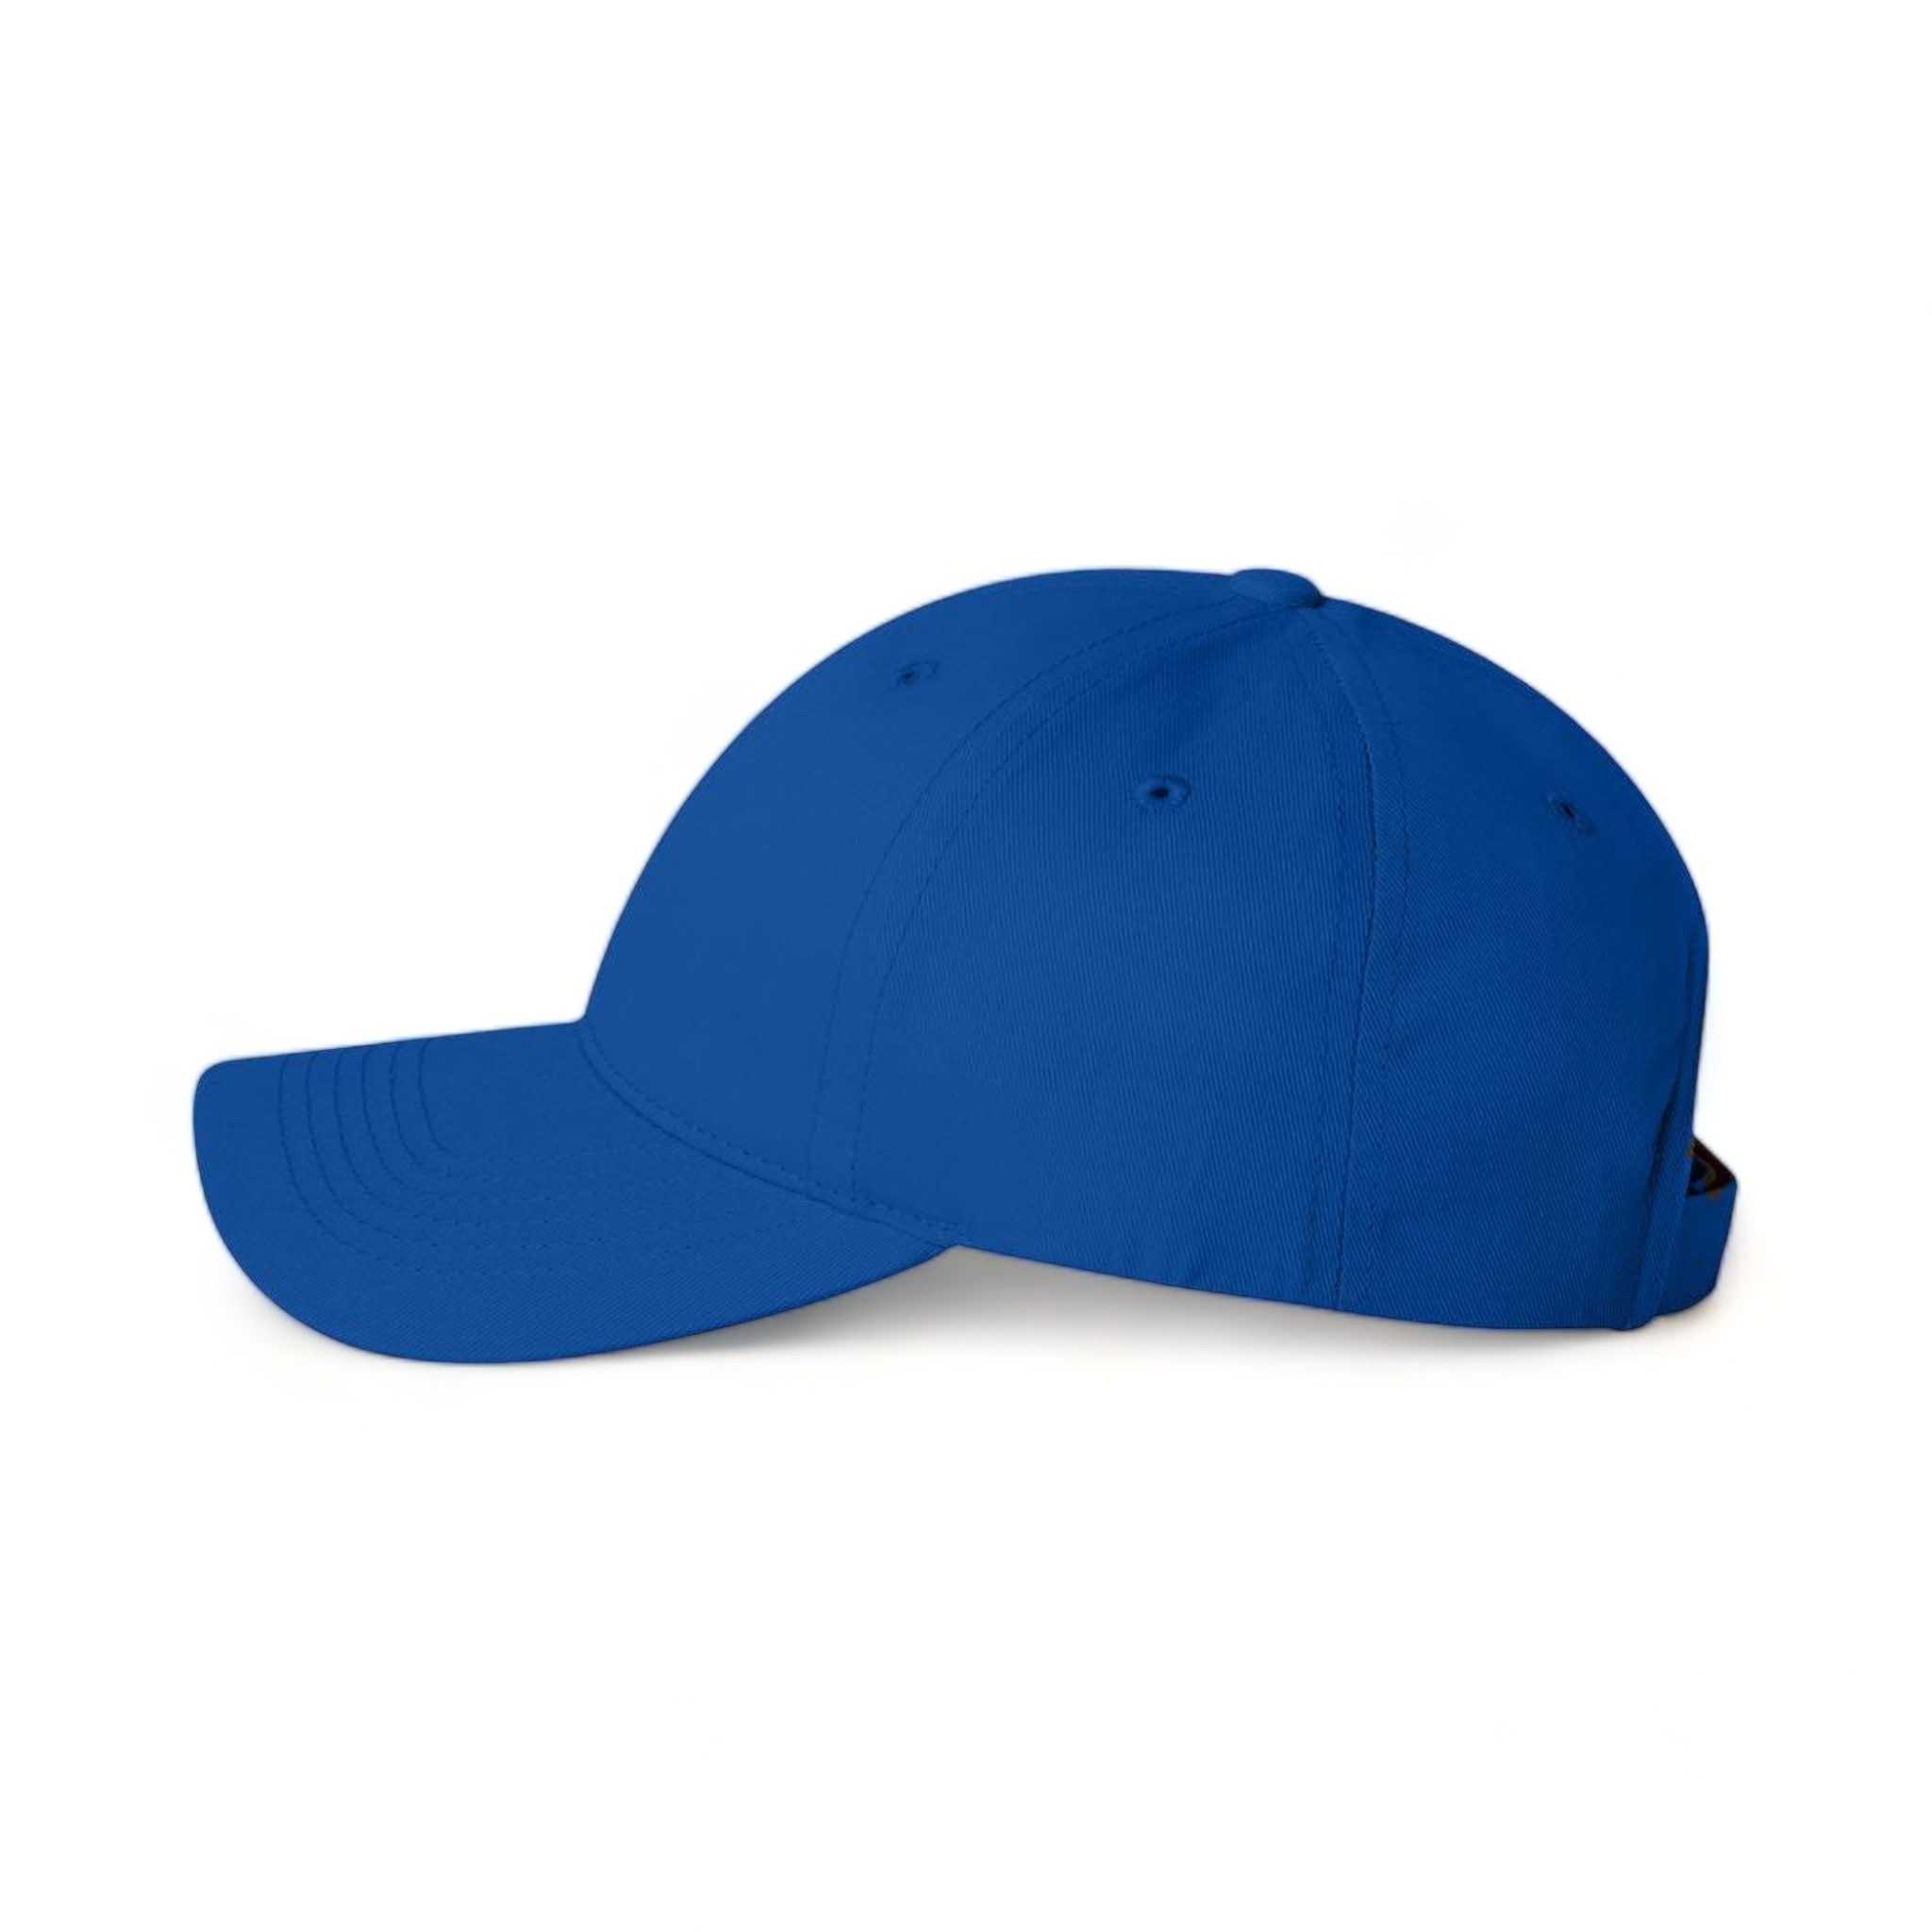 Side view of Sportsman 2260 custom hat in royal blue